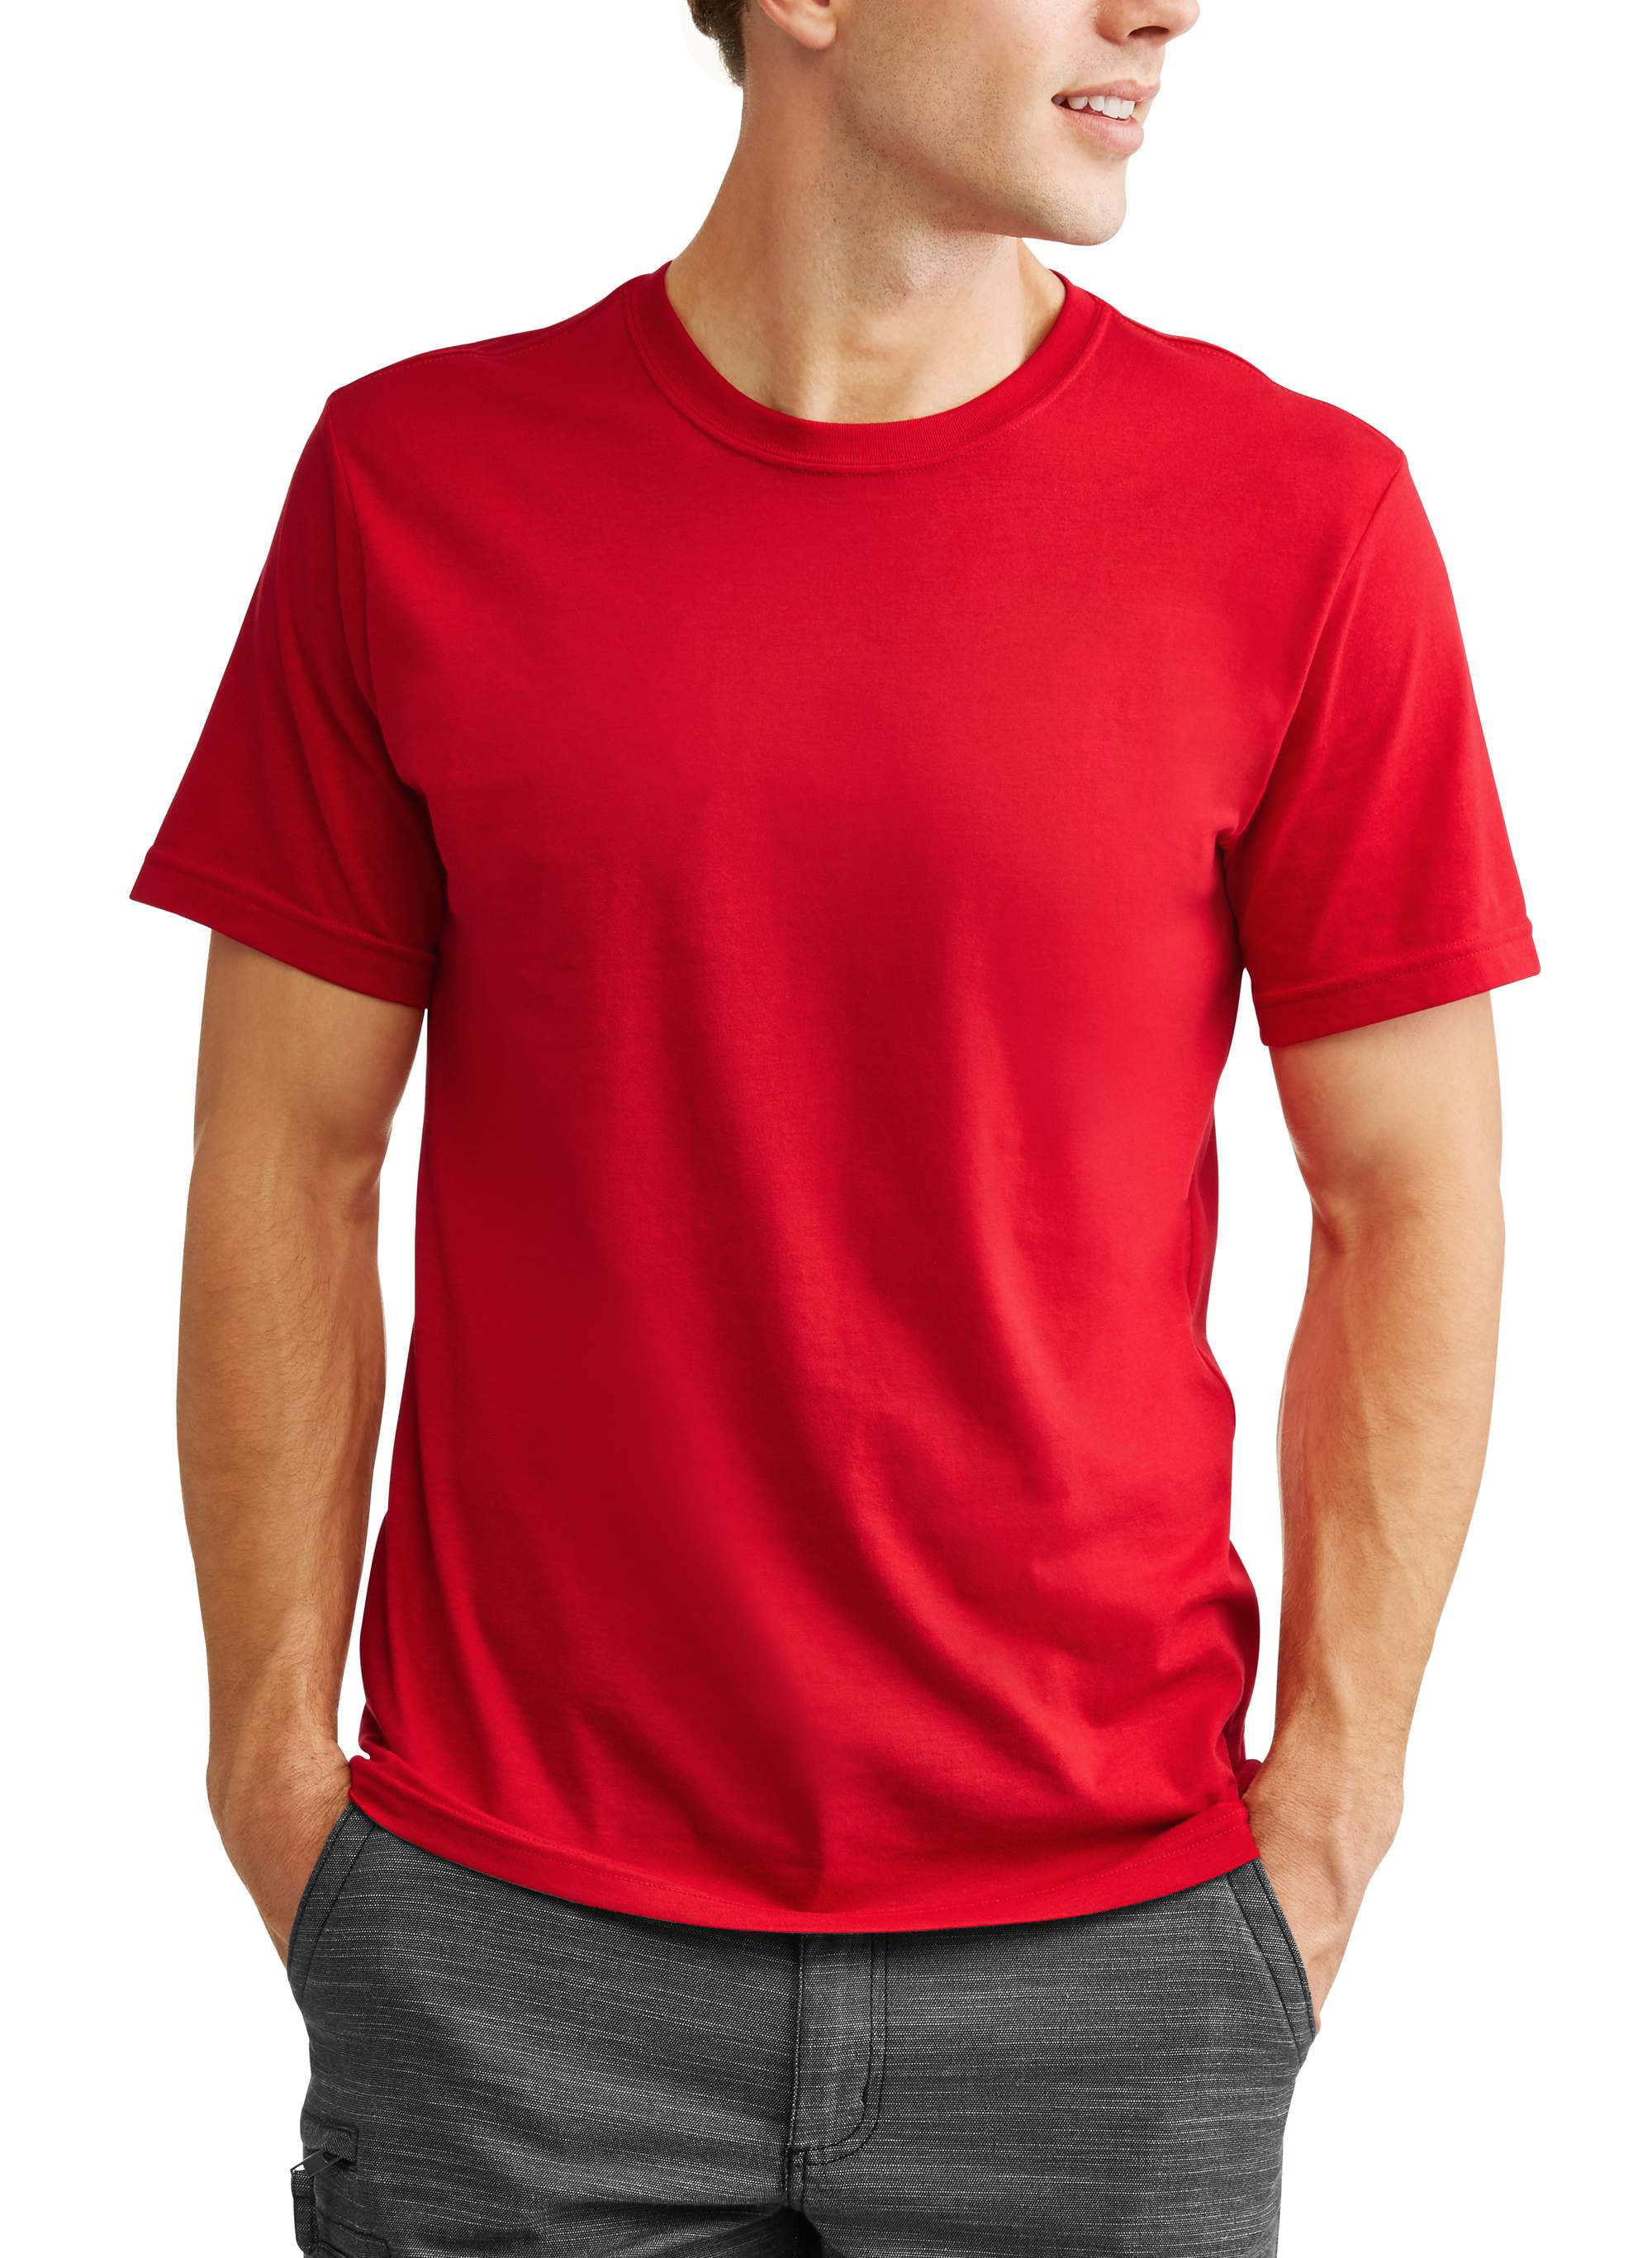 Men's Short Sleeve Performance Tee, up to size 5XL - Walmart.com